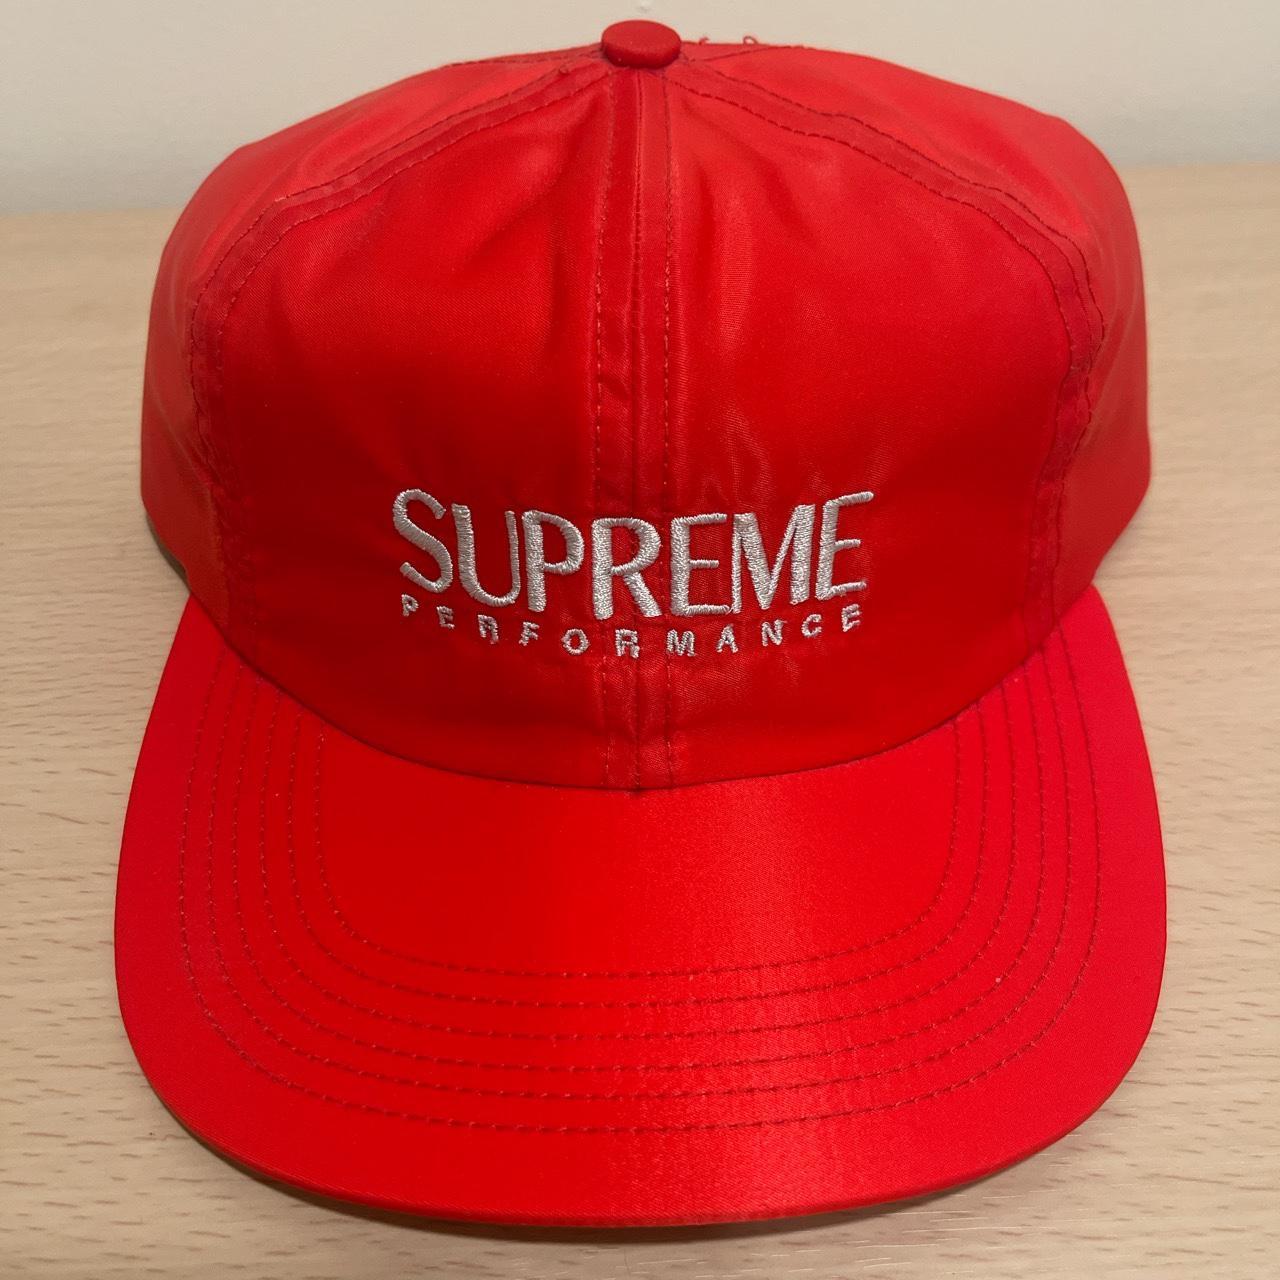 Supreme Performance Hat